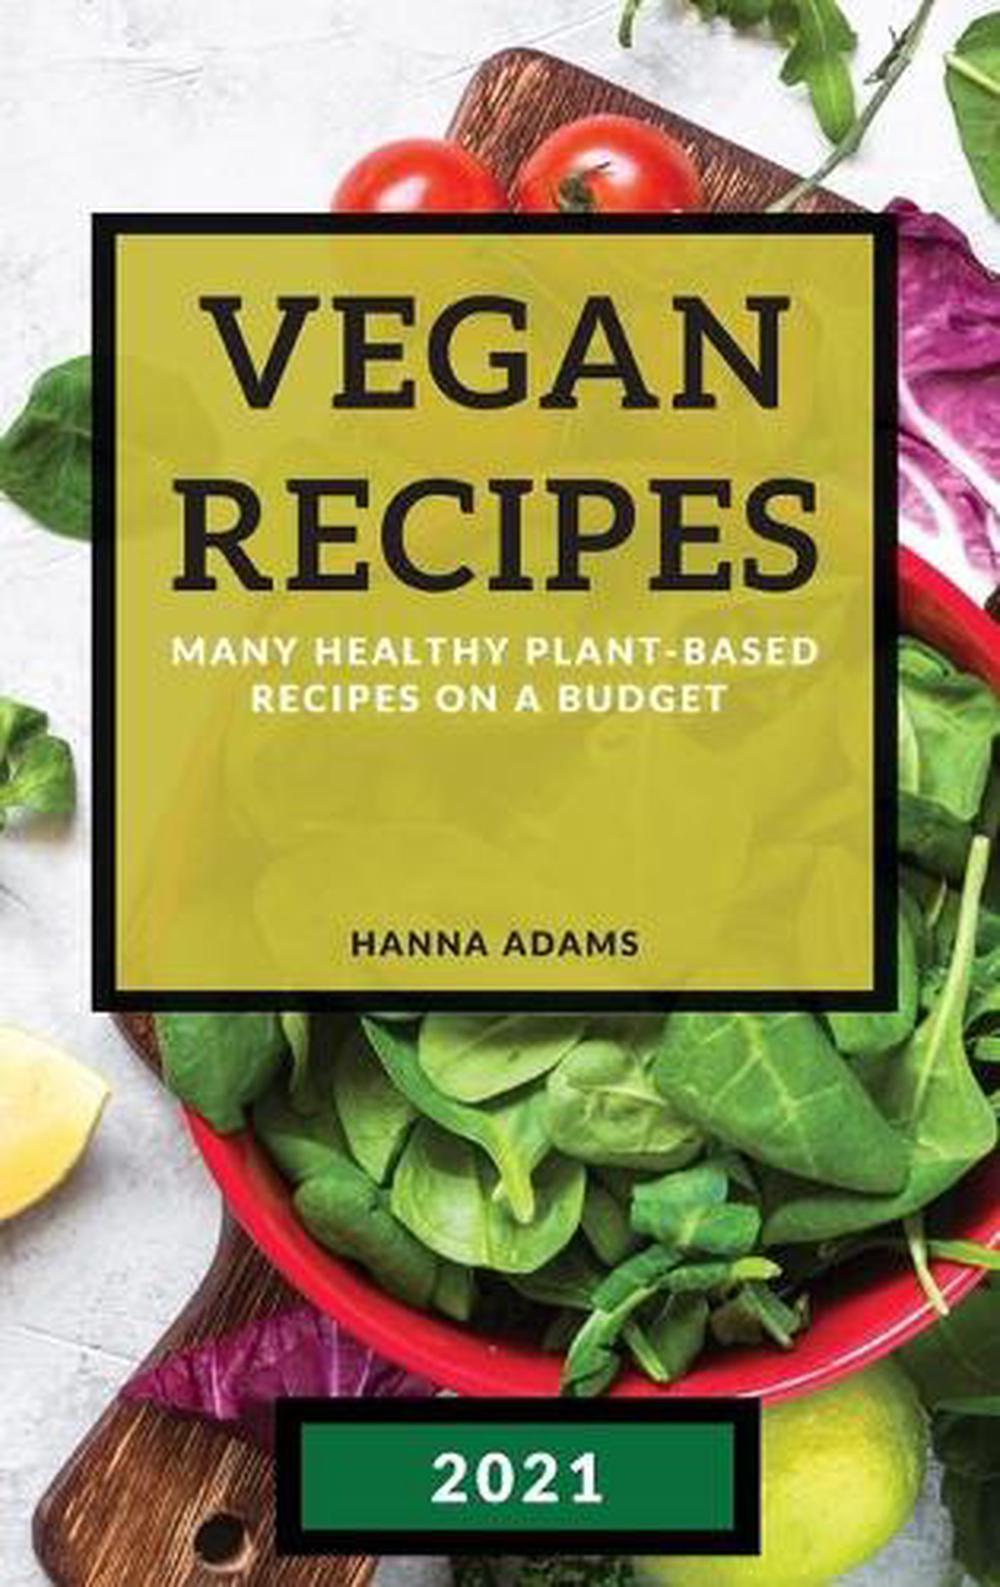 Vegan Recipes 2021 by Hanna Adams (English) Hardcover Book Free ...